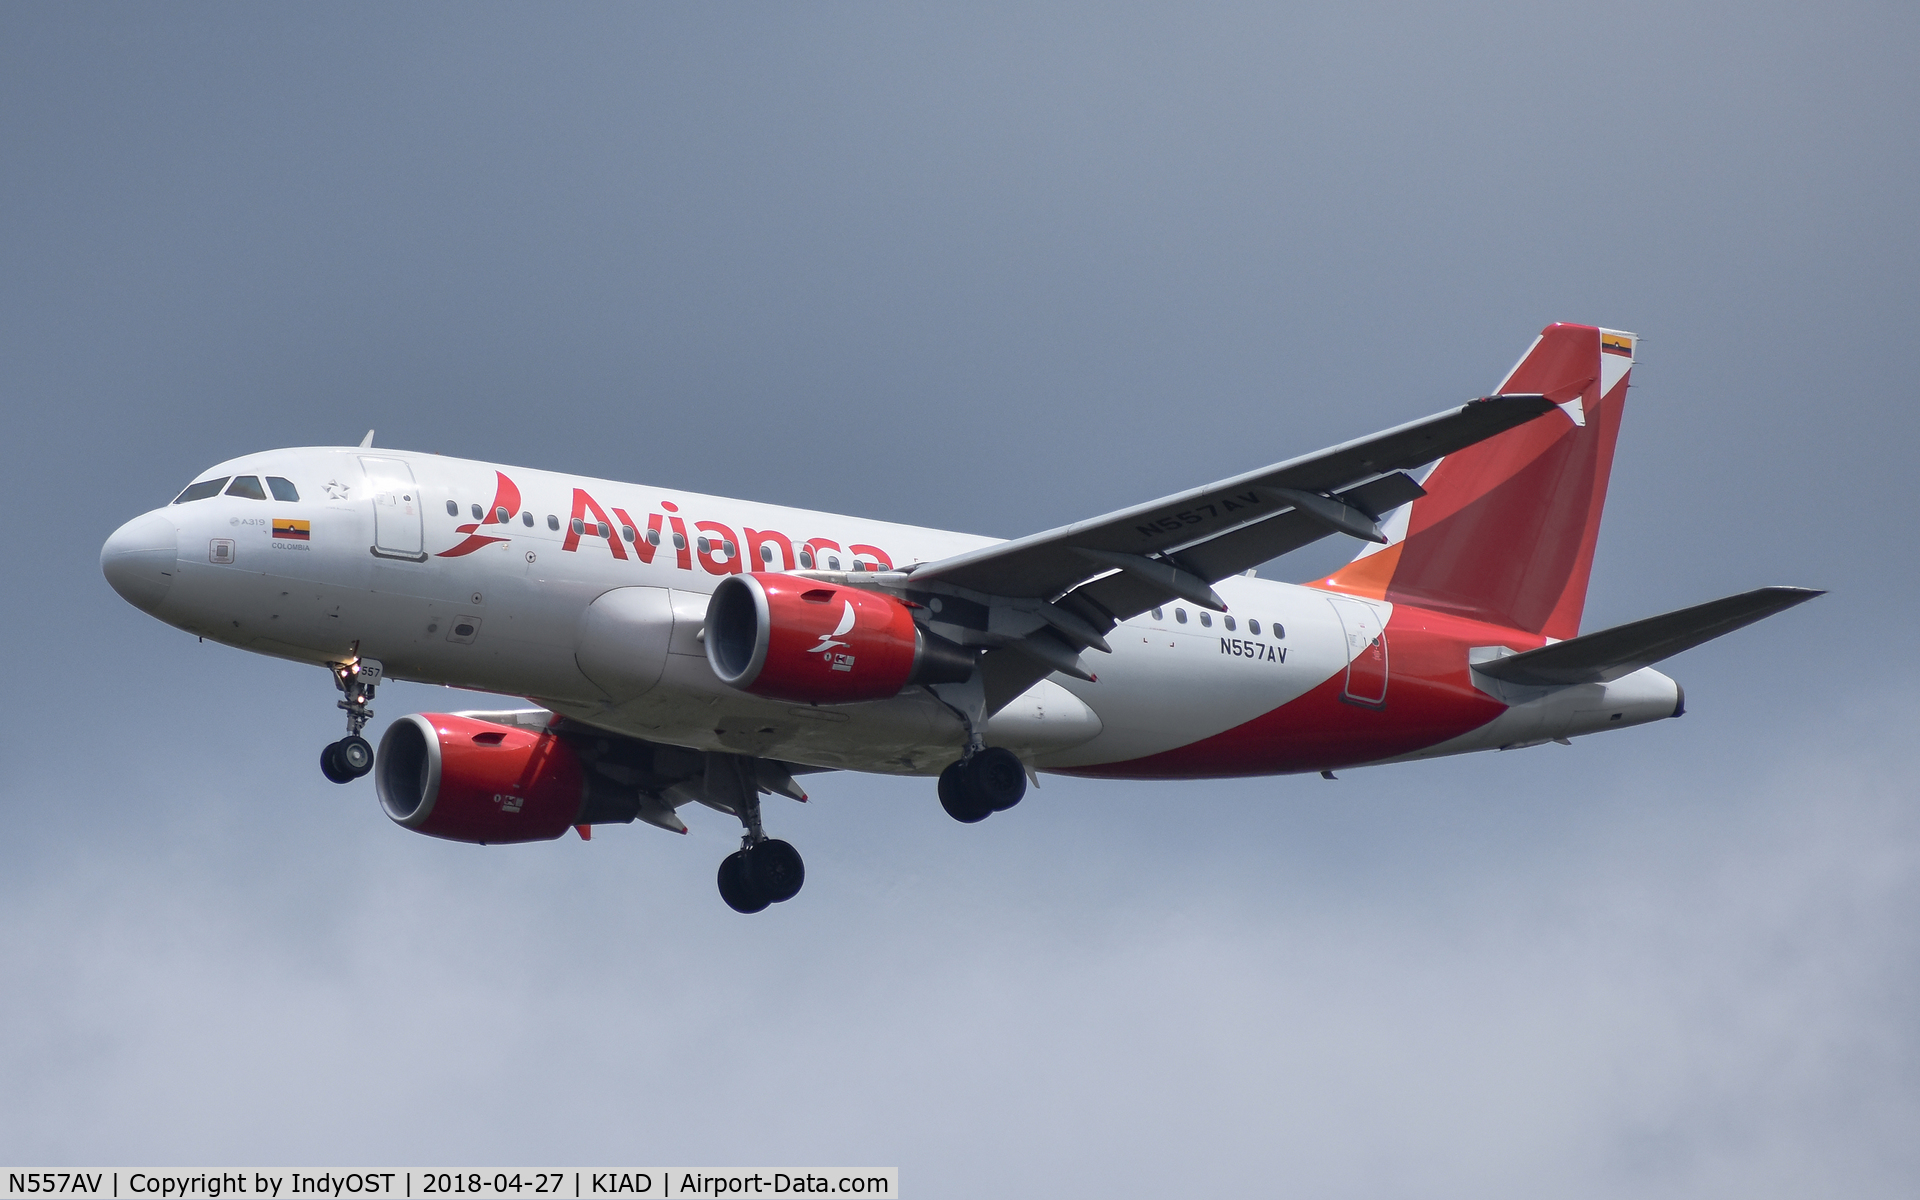 N557AV, 2012 Airbus A319-115 C/N 5057, Avianca Airbus A319 landing at Dulles International Airport on 27 Apr 2018.